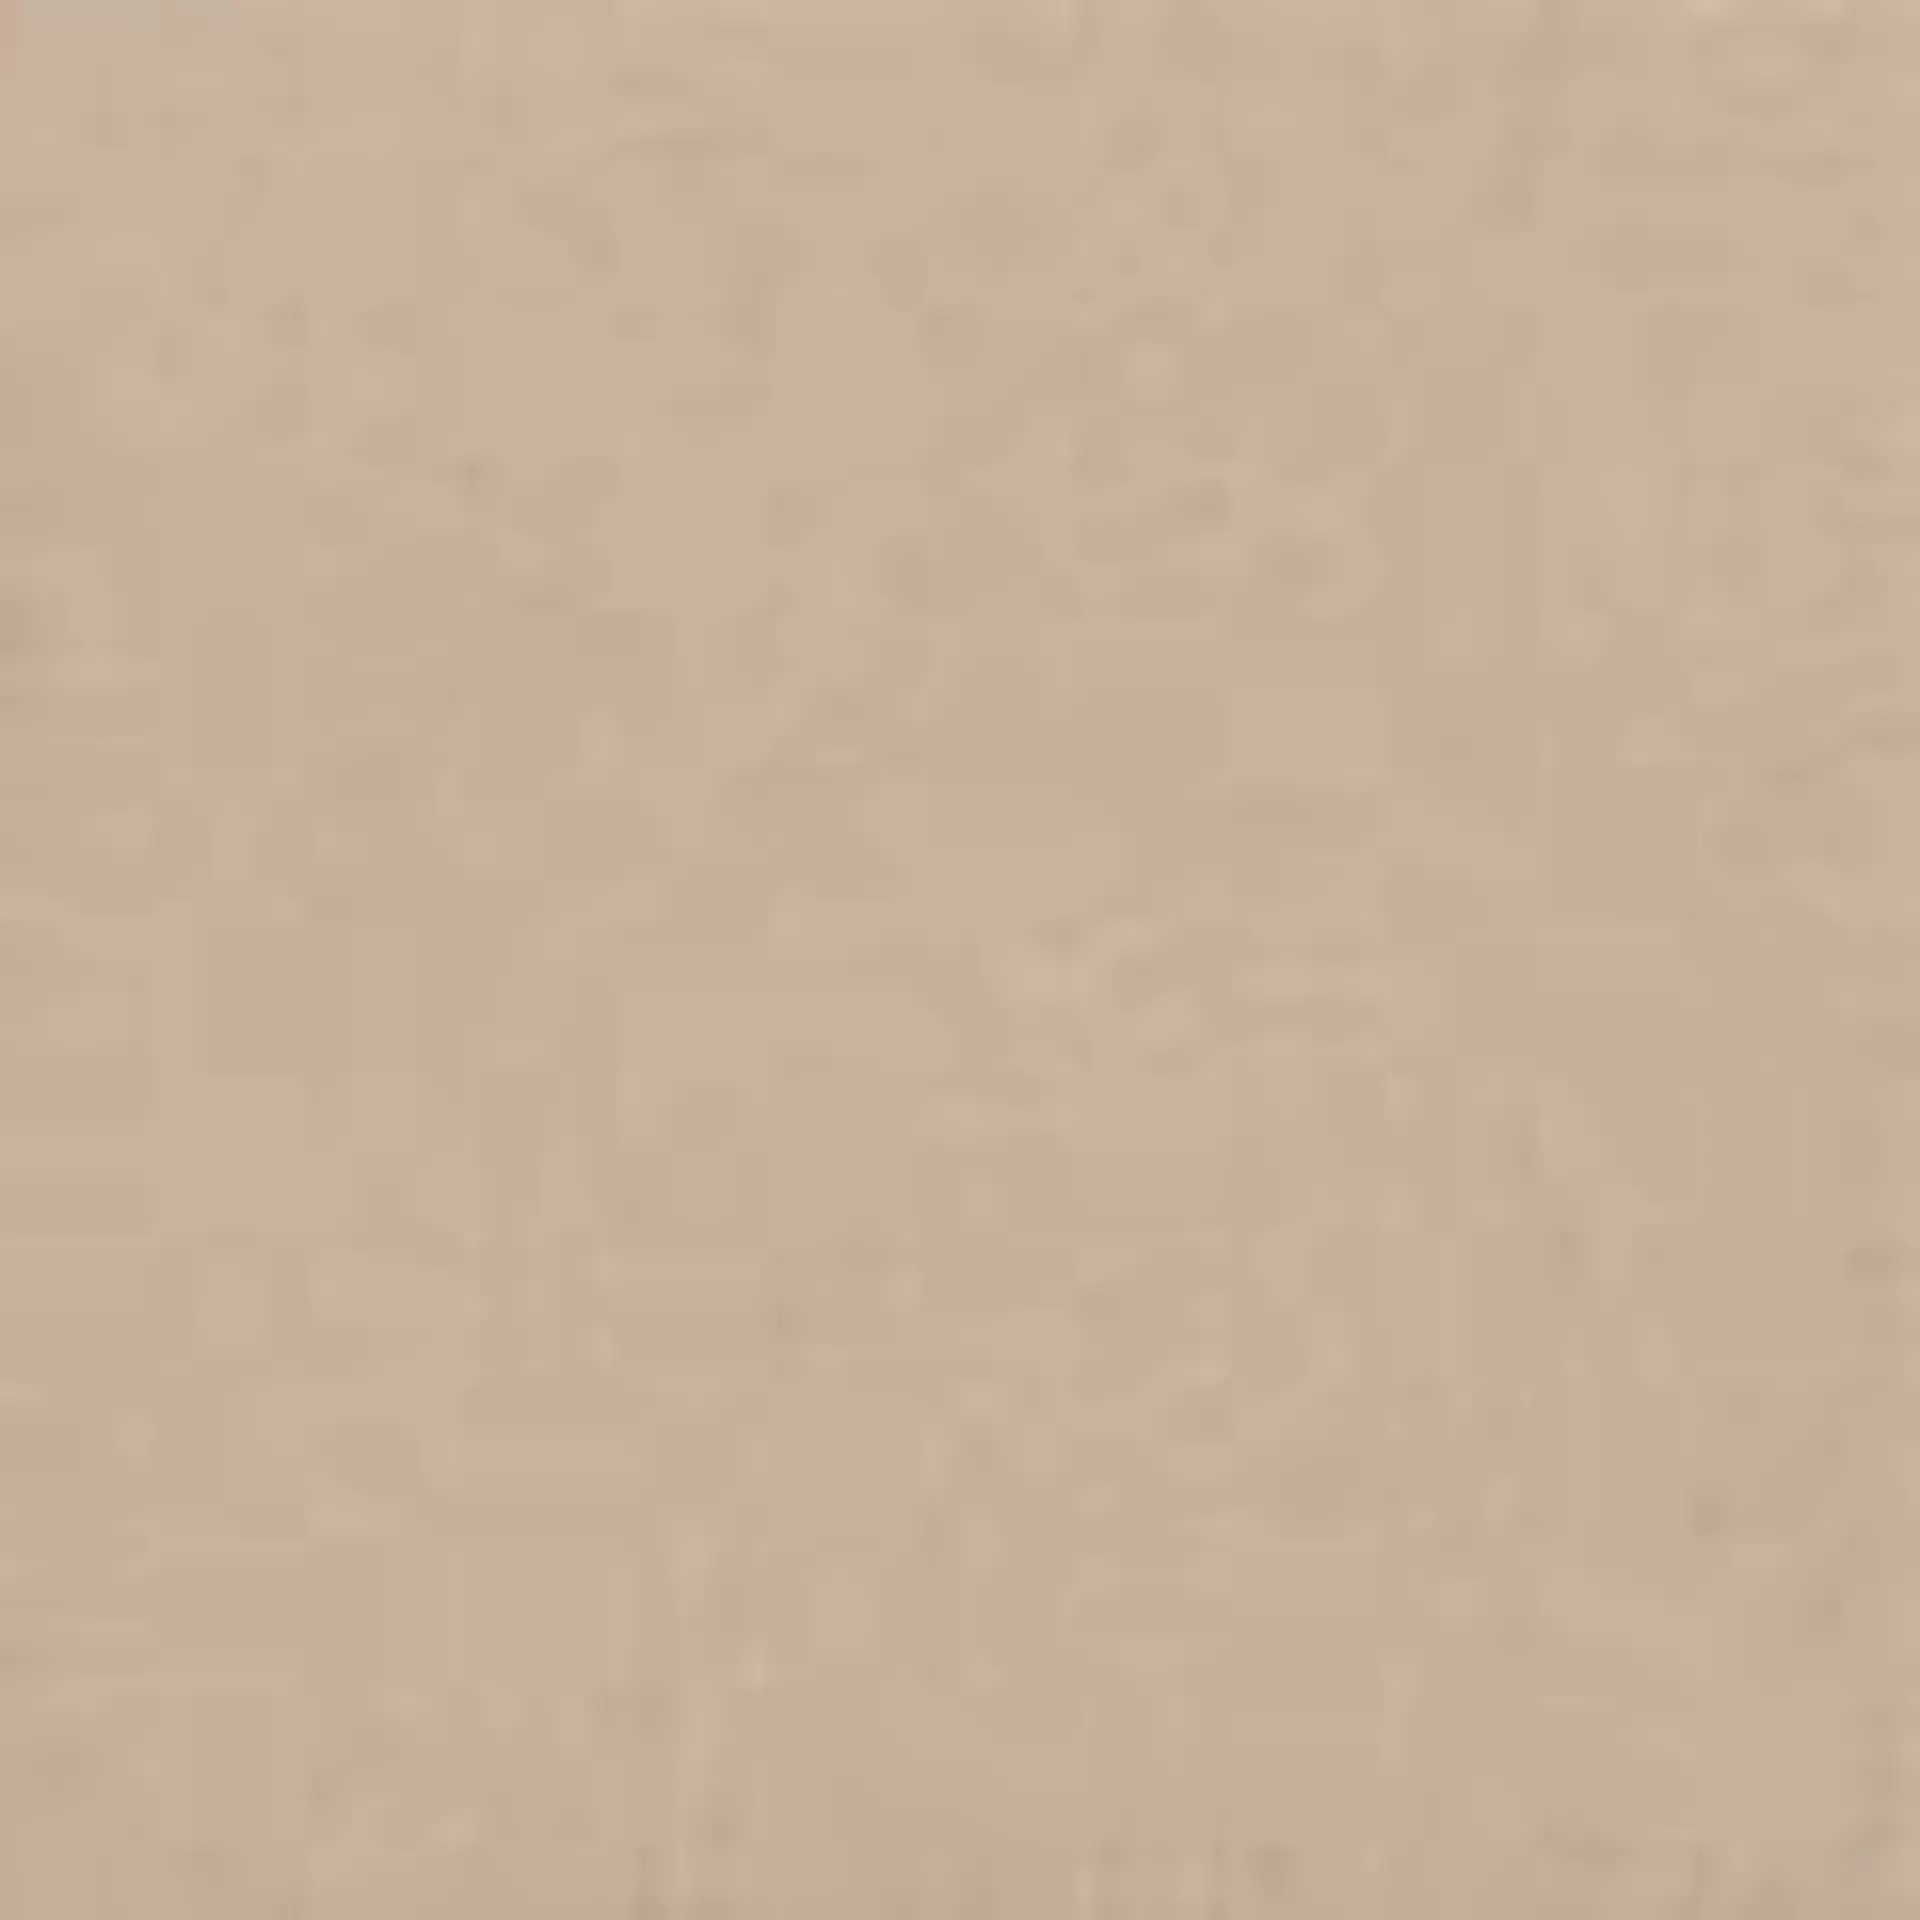 Bodenfliese,Wandfliese Marazzi Sistemt Graniti Sabbia Naturale – Matt Sabbia MRTW matt natur 20x20cm 8mm